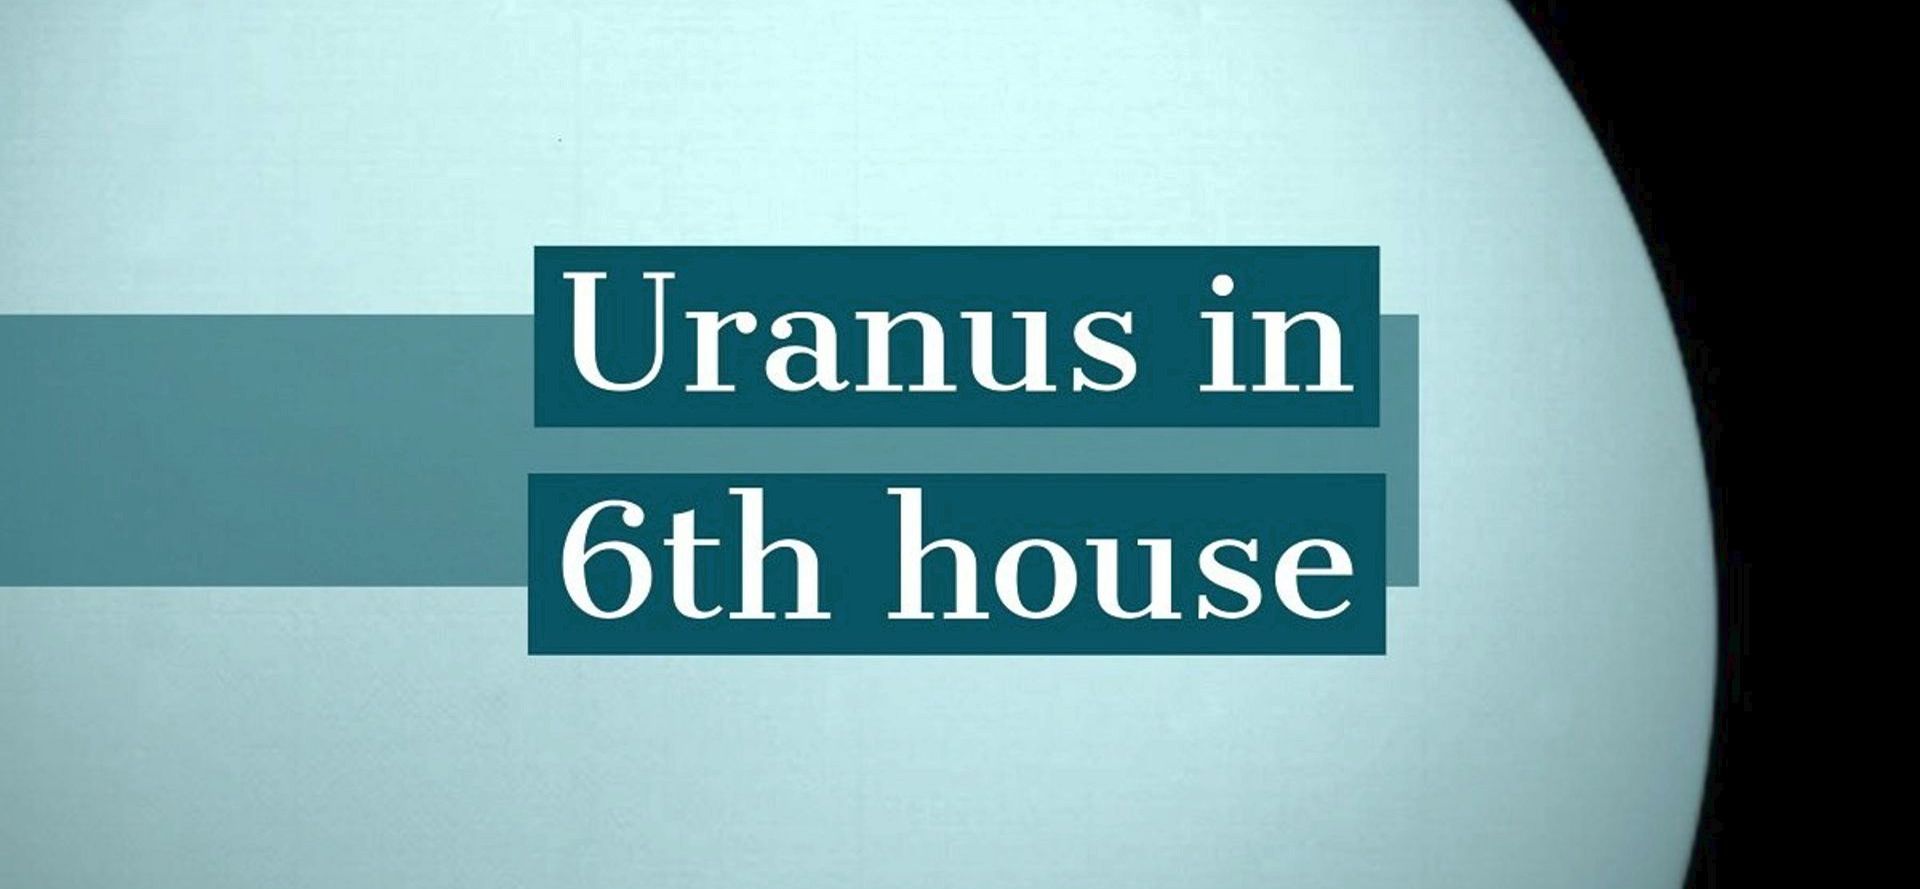 Uranus in 6th house.